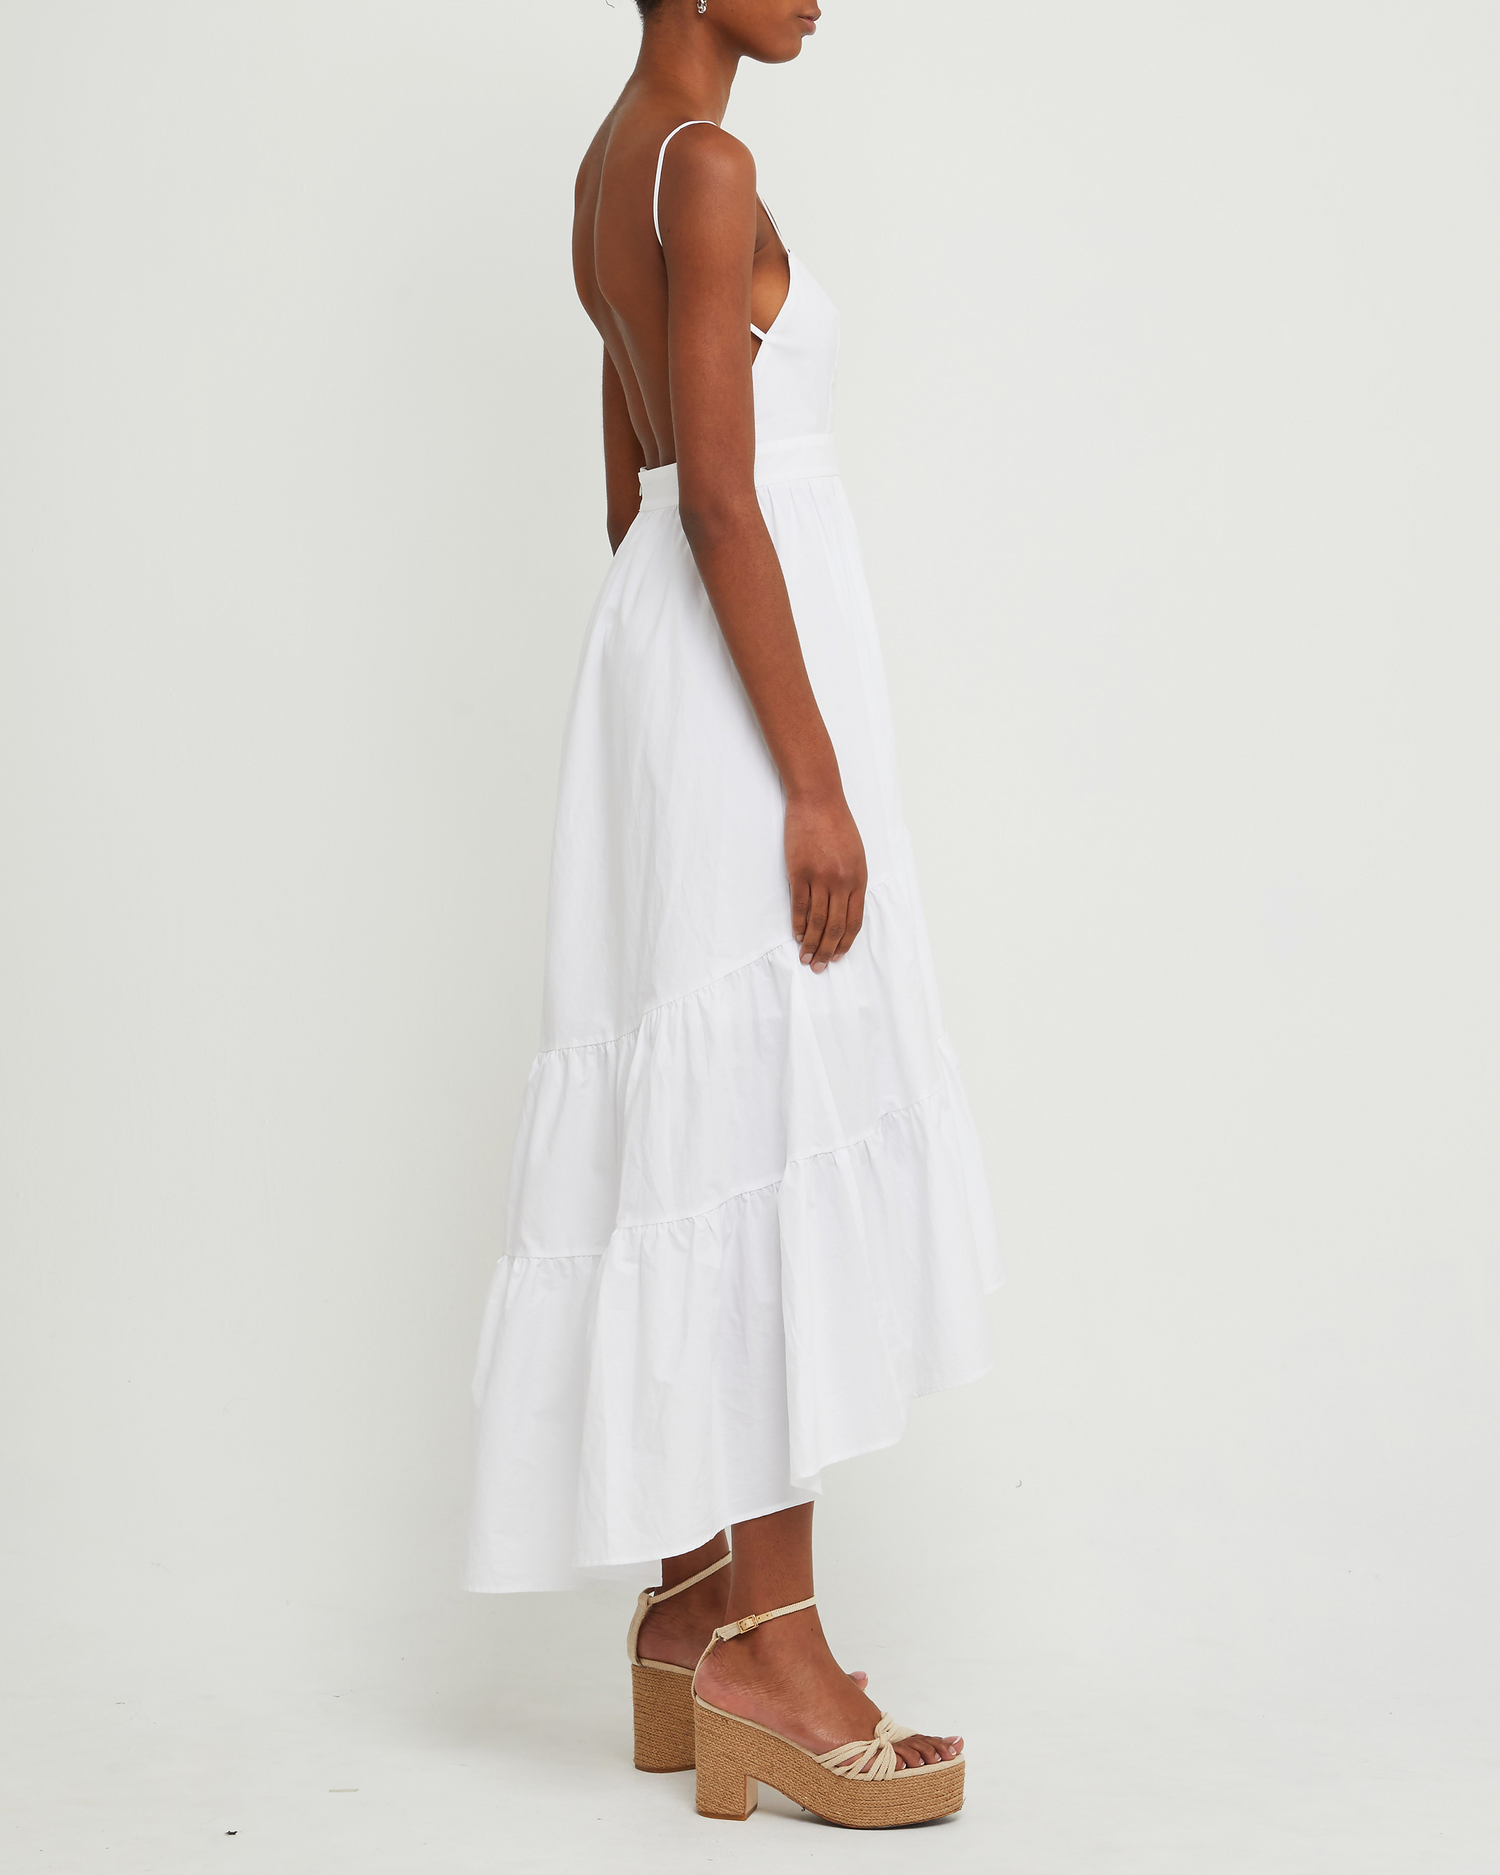 Third image of Dionne Cotton Dress, a white midi dress, spaghetti straps, high-low, high low skirt, maxi